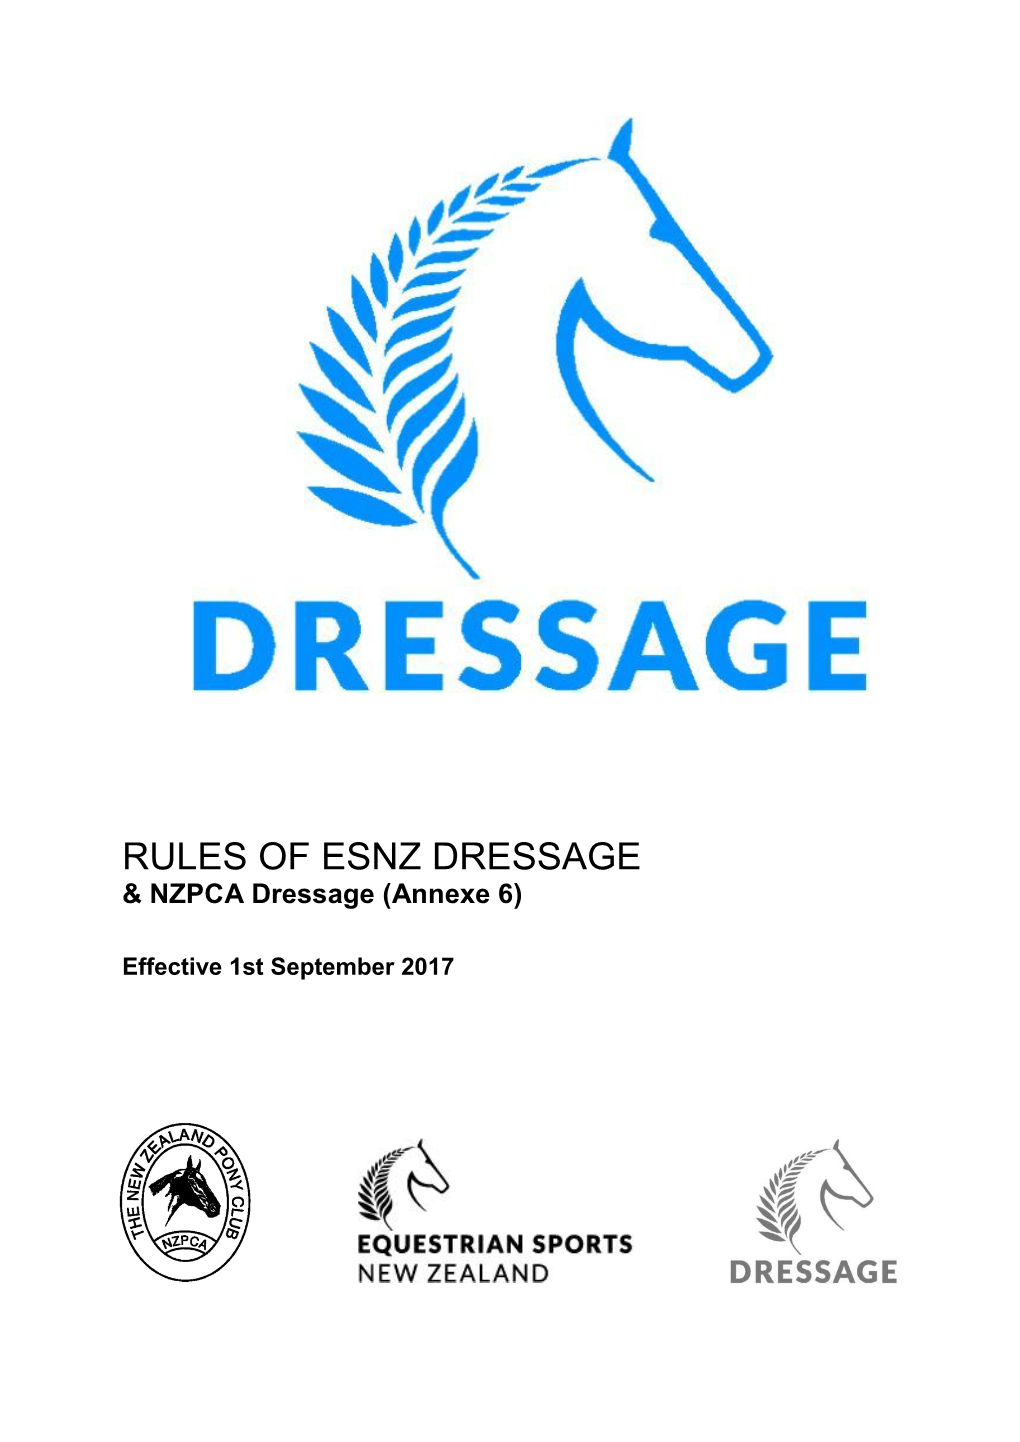 RULES of ESNZ DRESSAGE & NZPCA Dressage (Annexe 6)